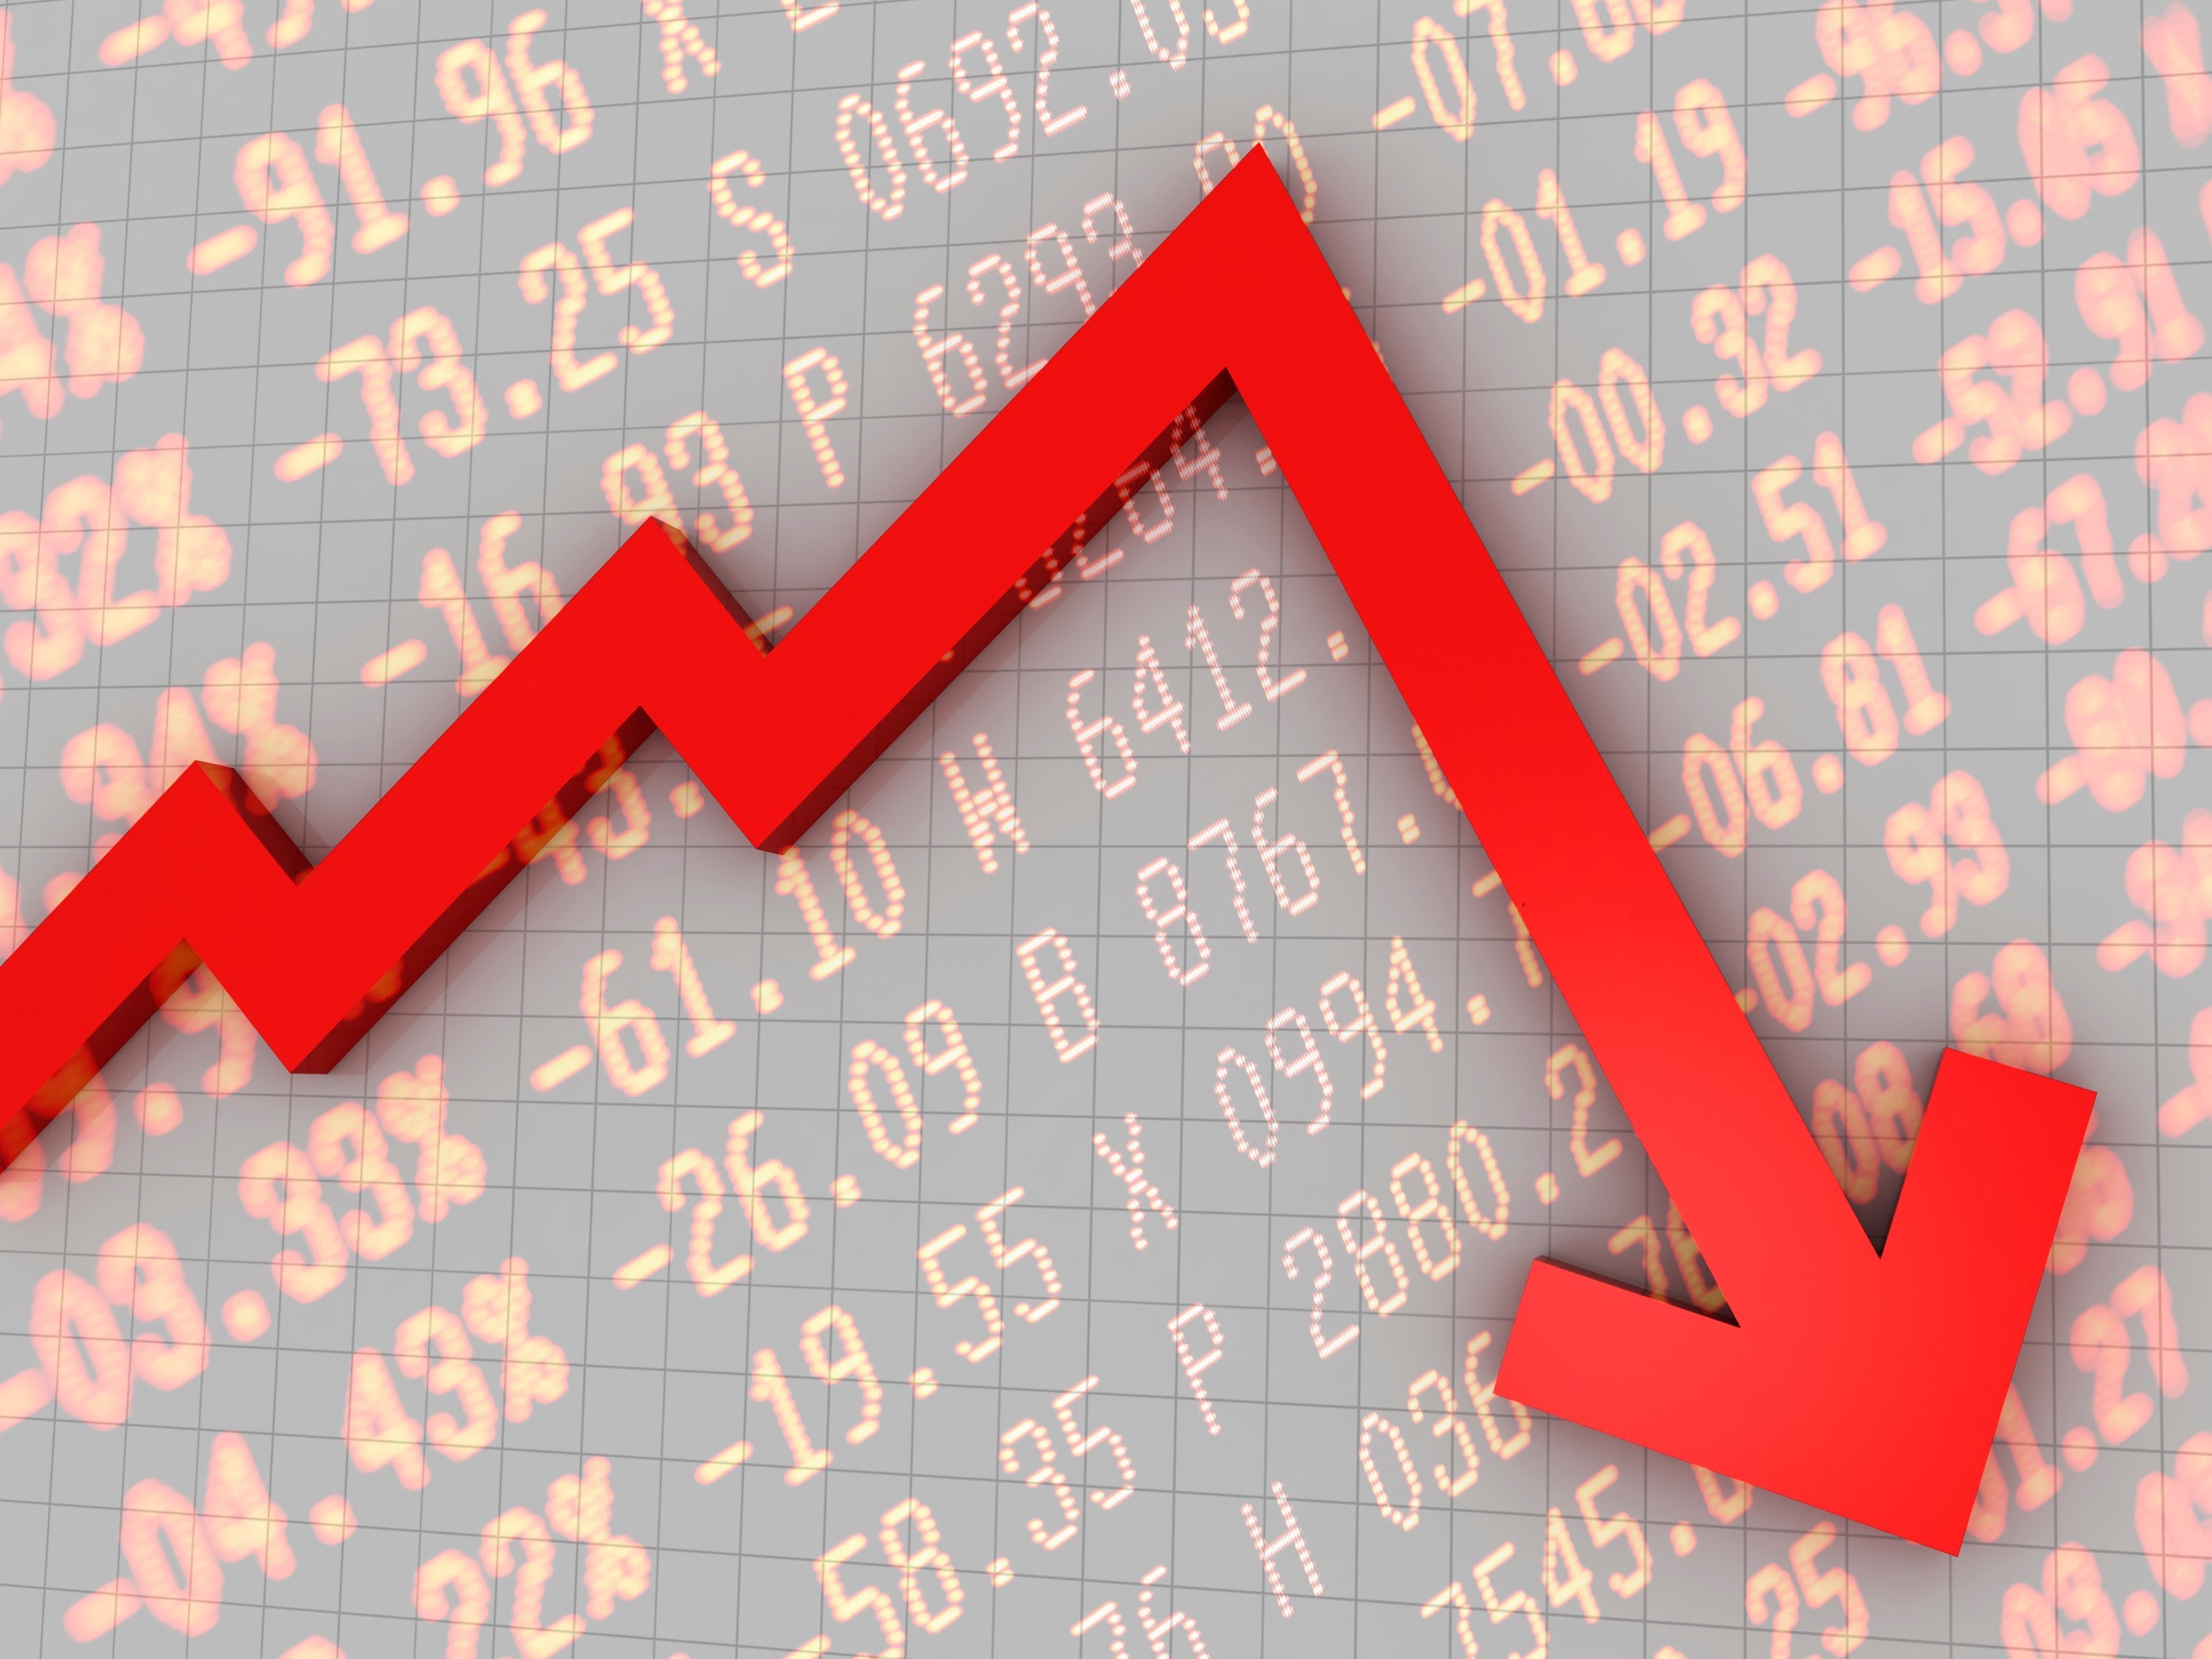 feb 2016 stock market crash